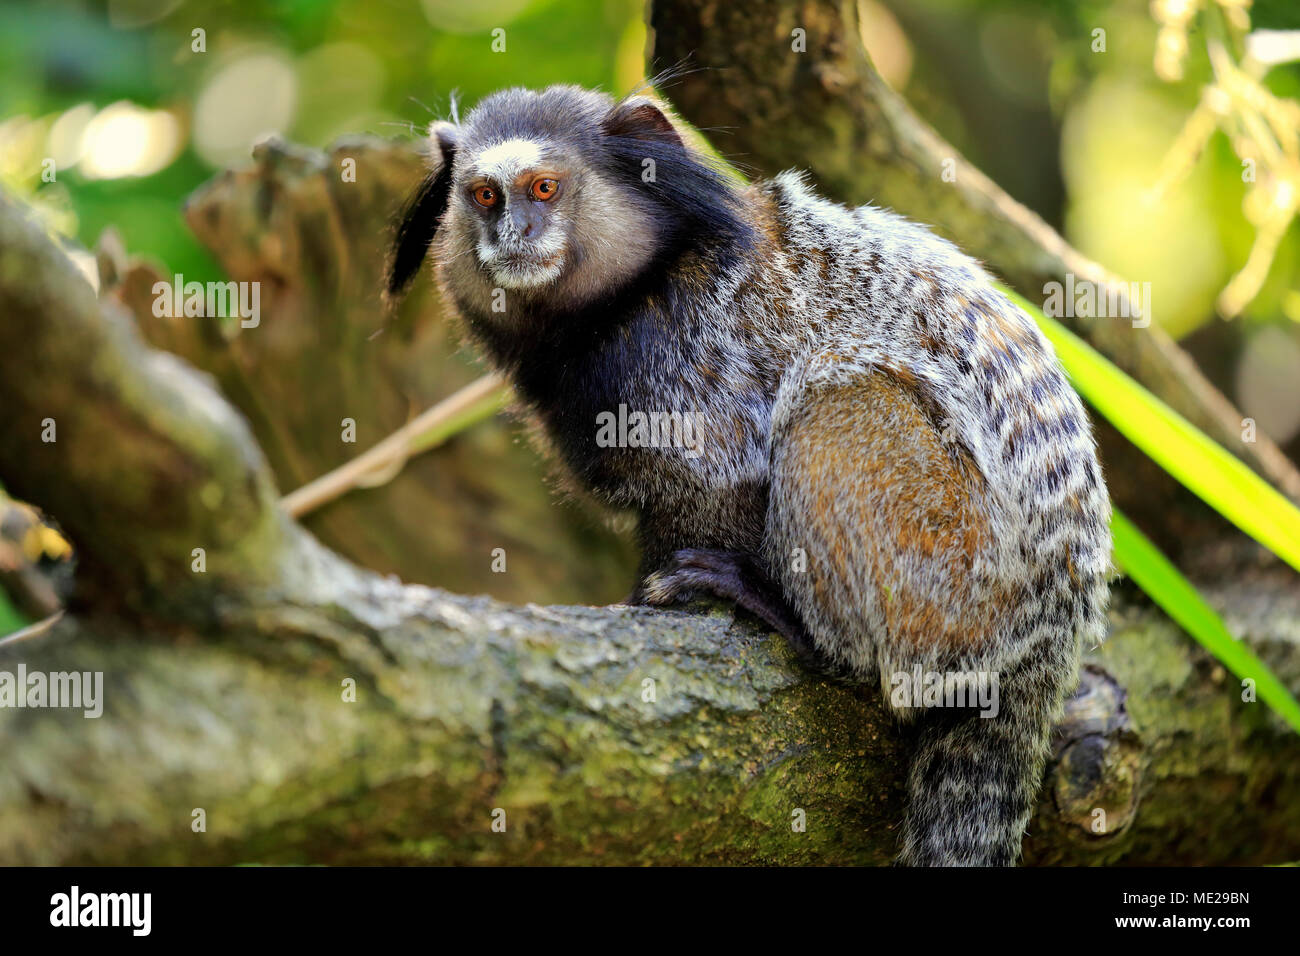 Wied's marmoset (Callithrix kuhlii), adult, sits on branch, vigilant, captive Stock Photo